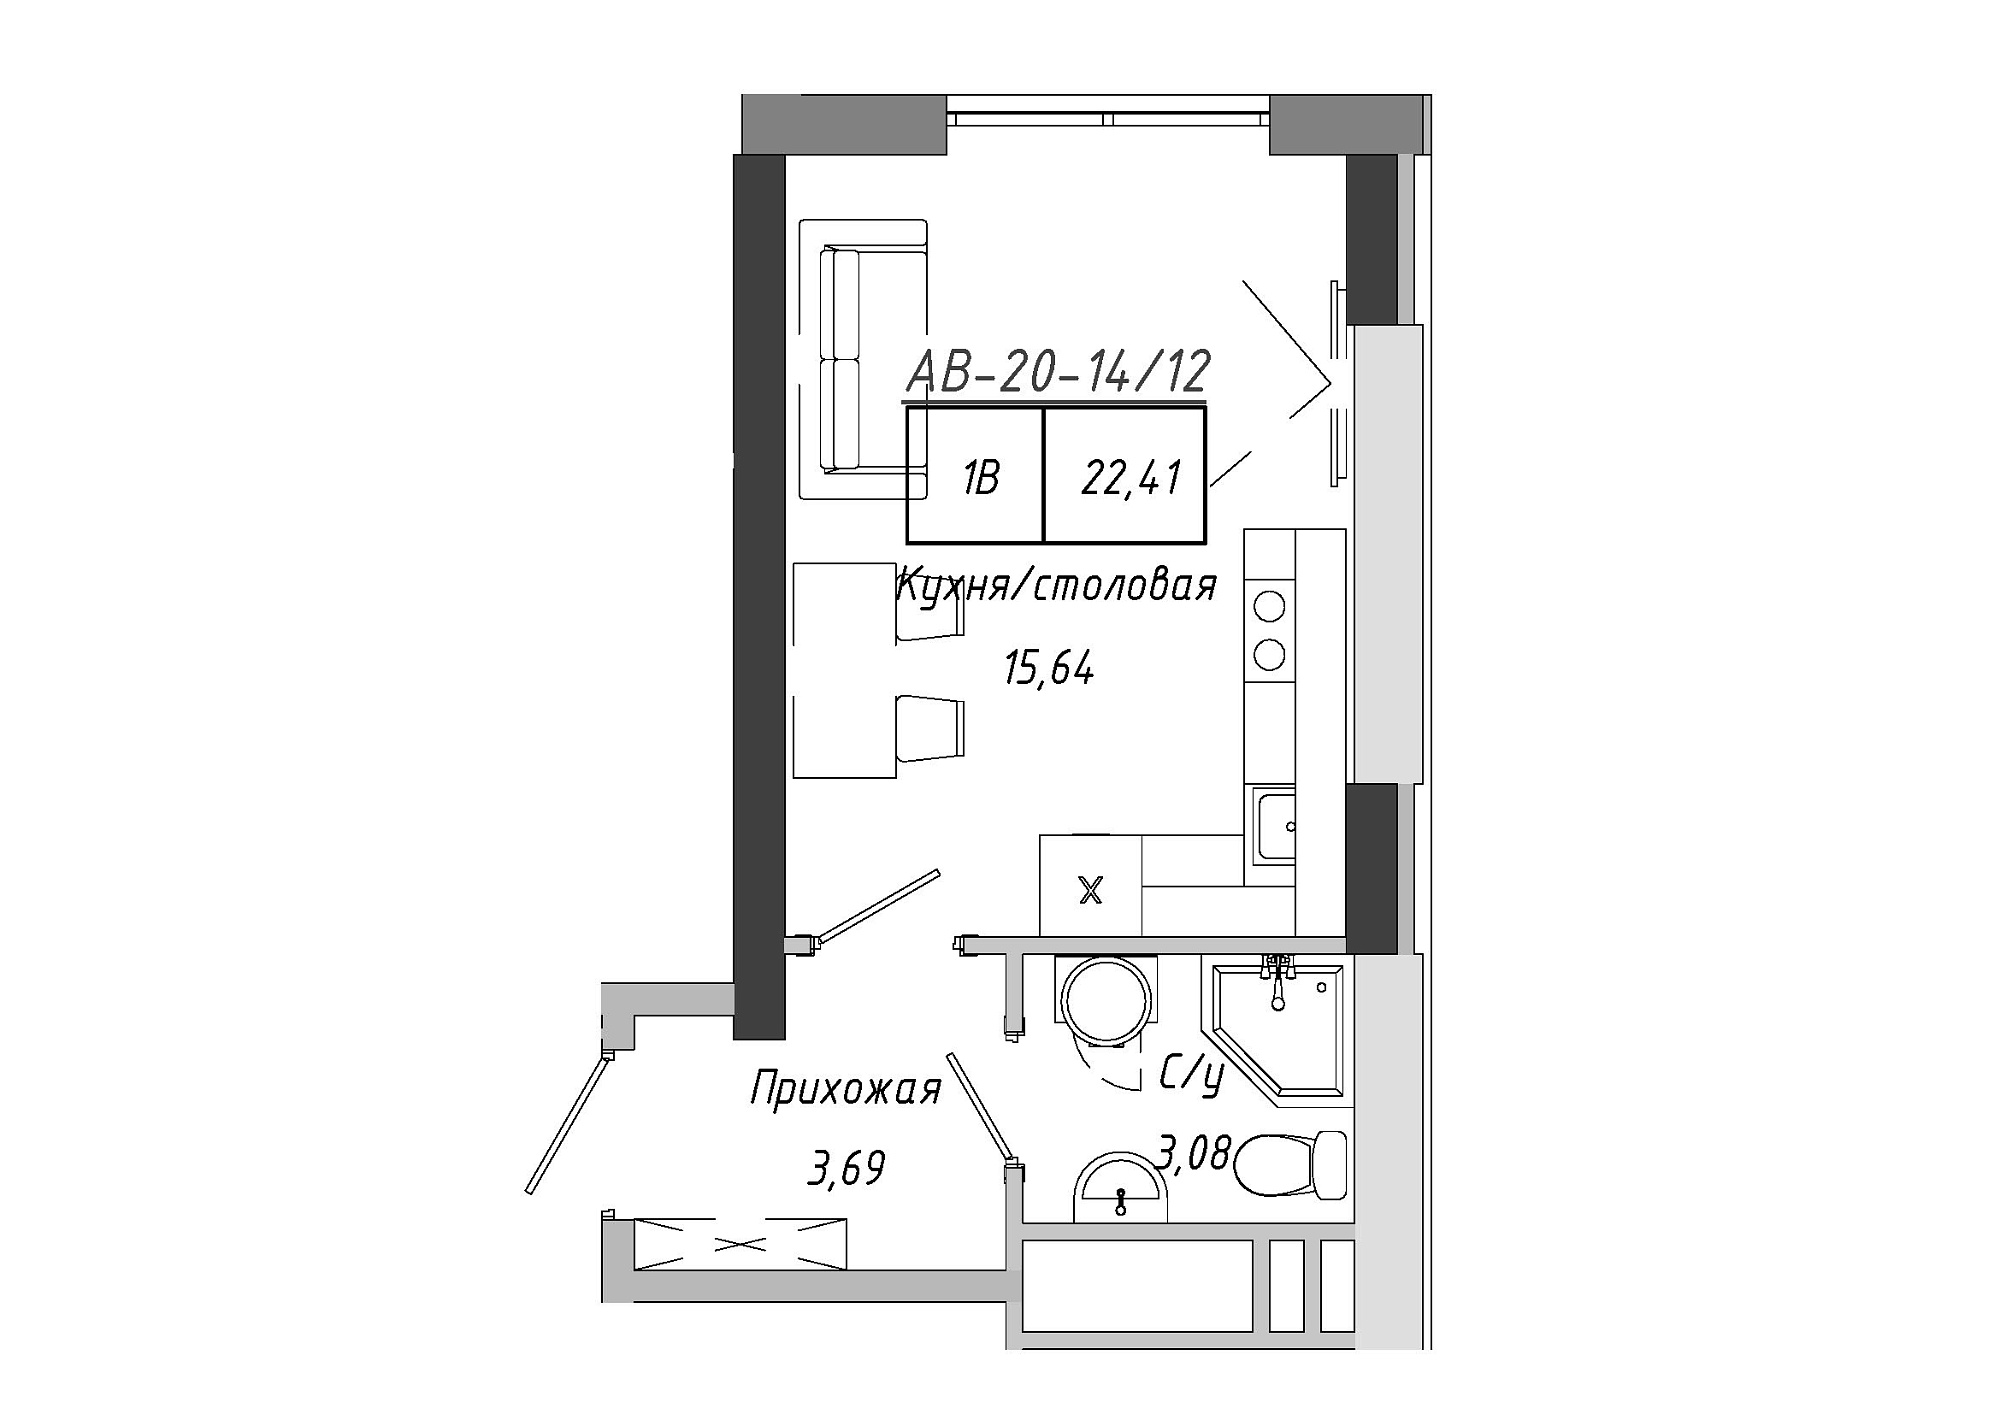 Планировка Smart-квартира площей 22.41м2, AB-20-14/00112.